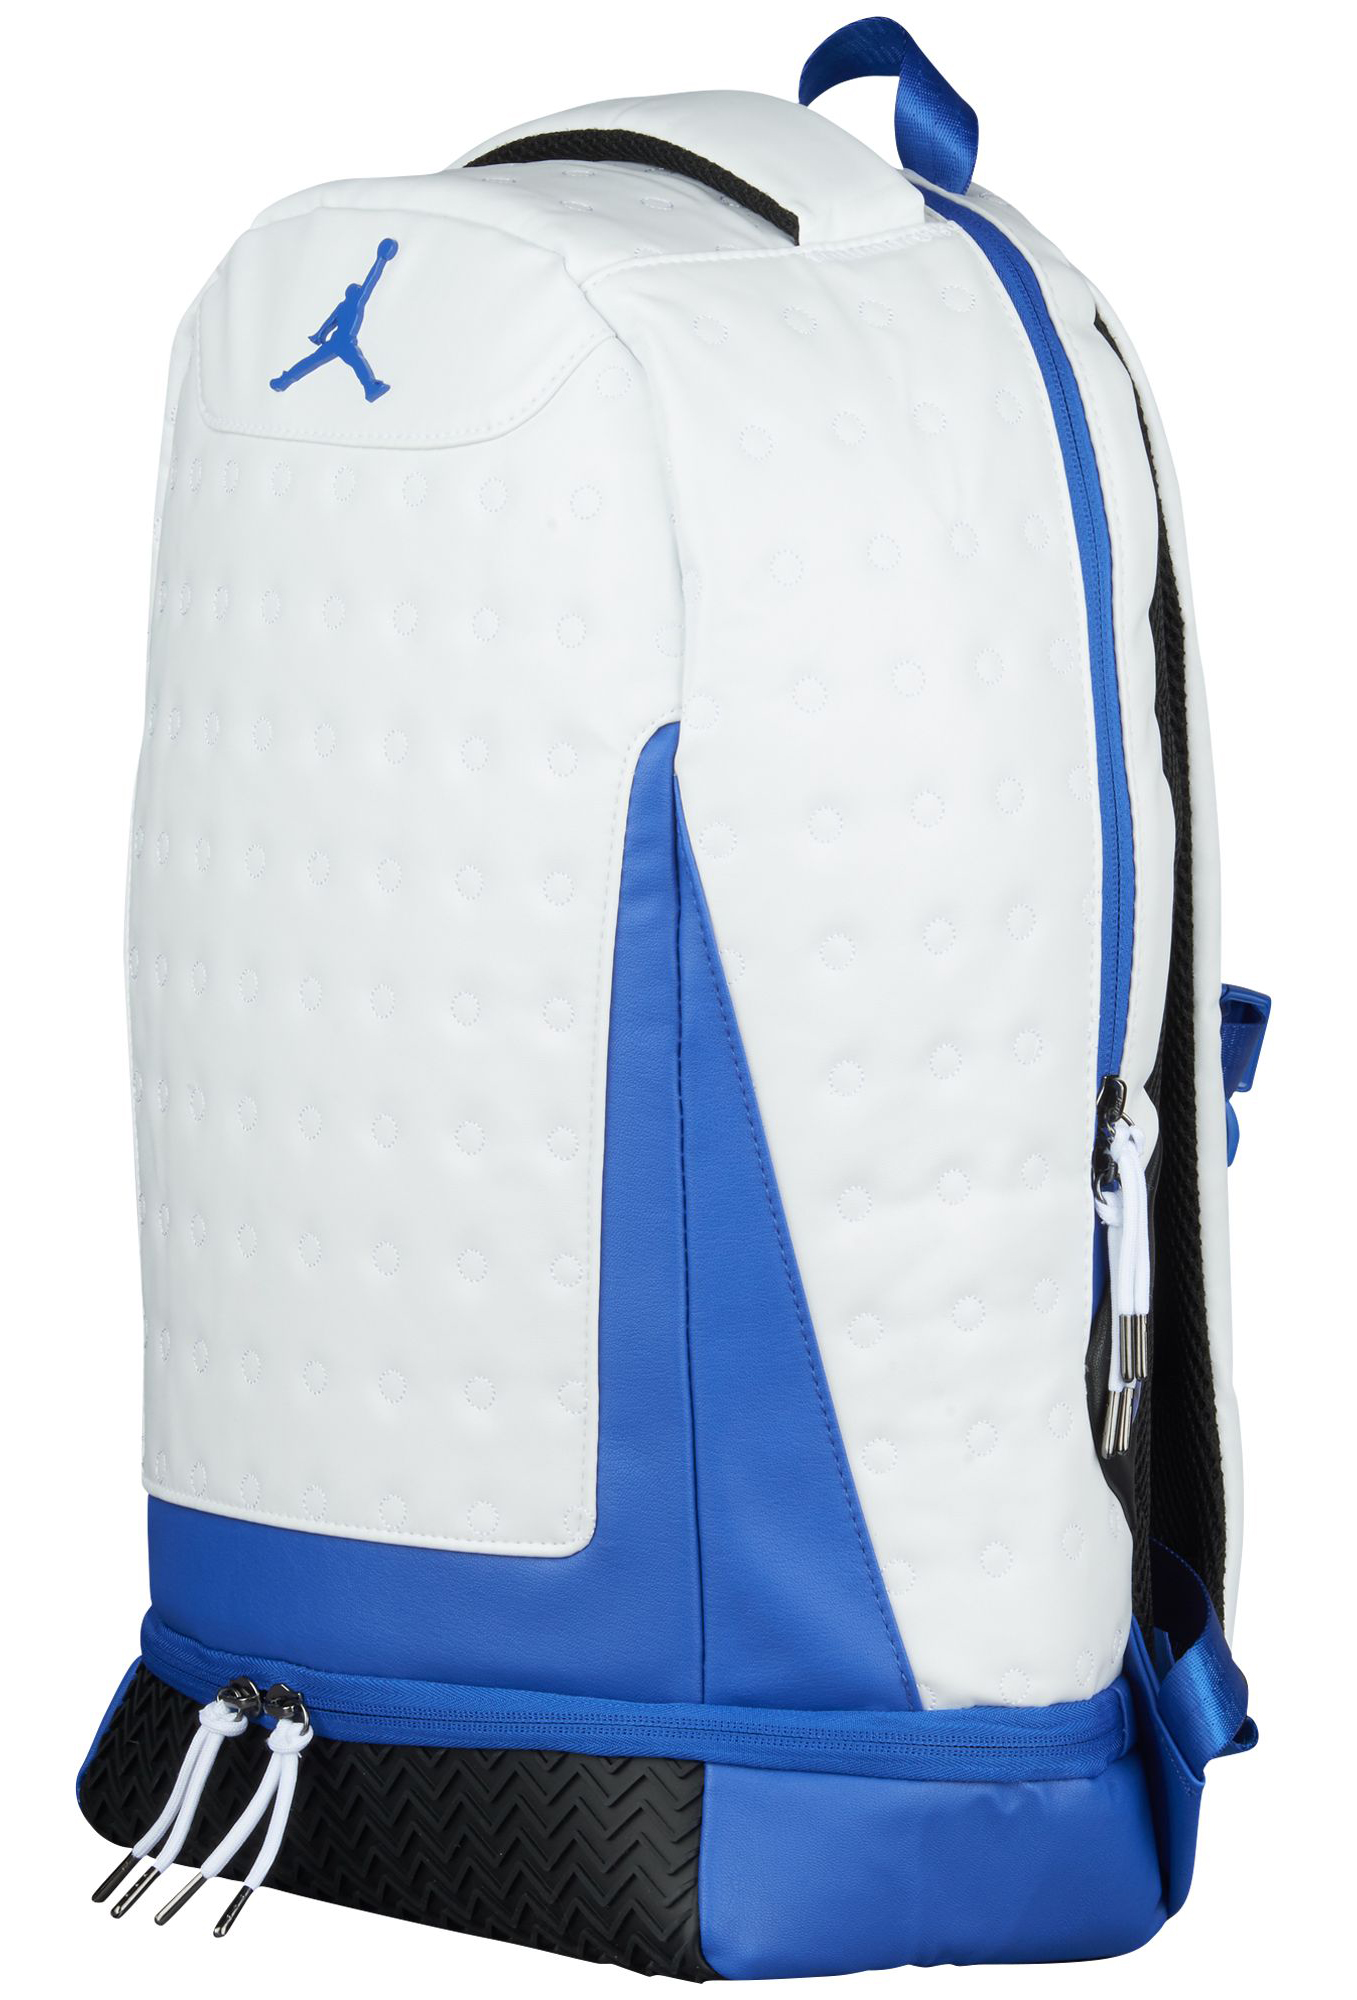 jordan-13-hyper-royal-backpack-1